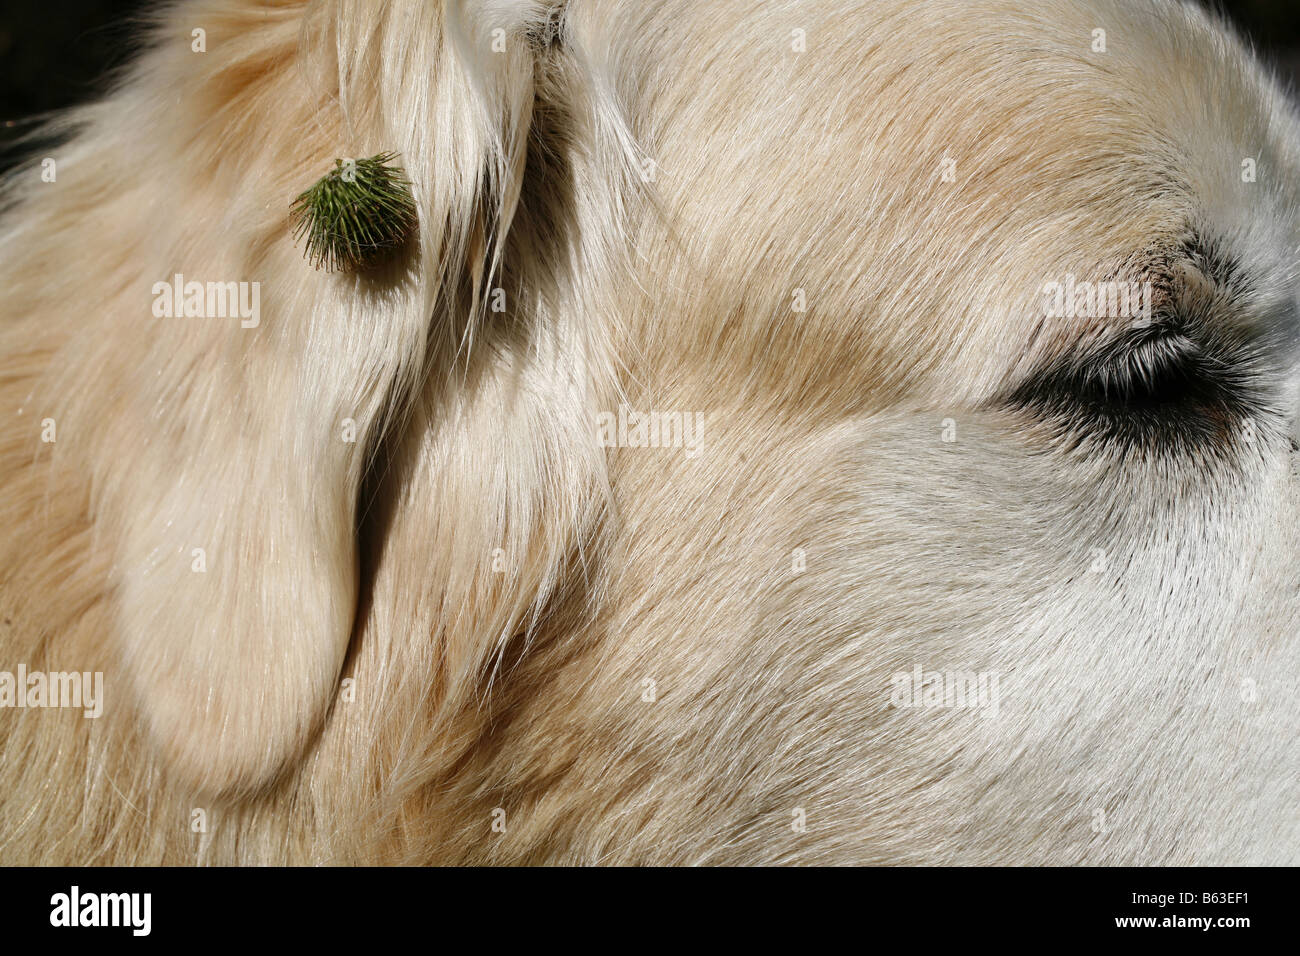 Burdock (Arctium sp). Seed head on the ear of a Golden Retriever Stock Photo